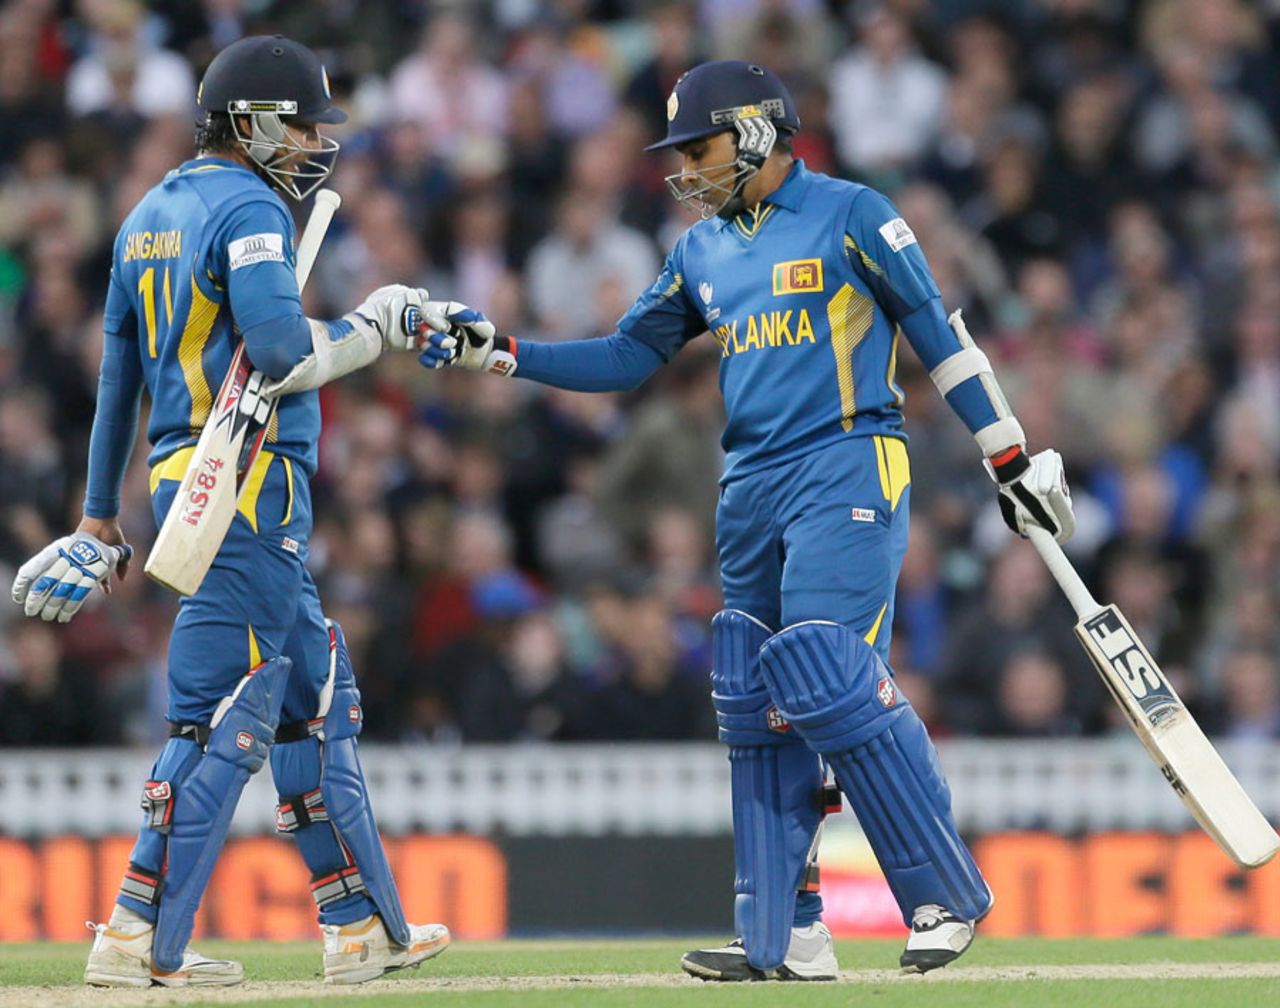 Kumar Sangakkara and Mahela Jayawardene punch gloves during their partnership, England v Sri Lanka, Champions Trophy, Group A, The Oval, June 13, 2013